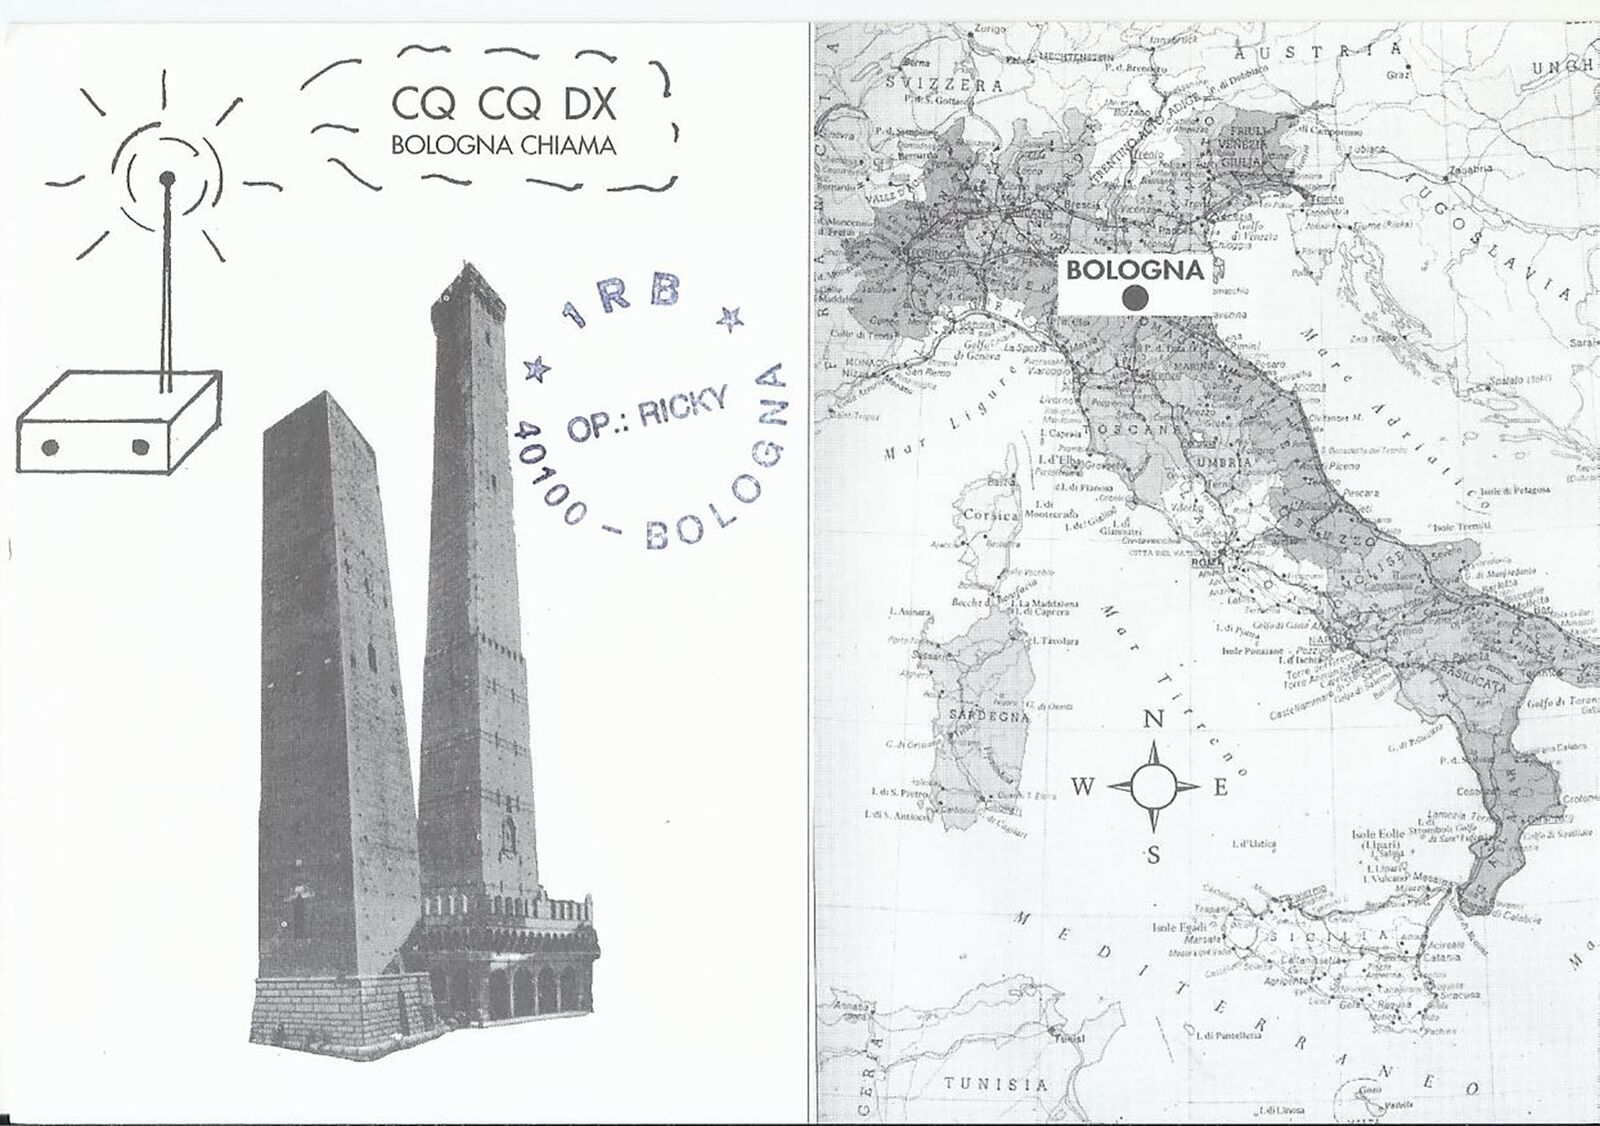 Bologna Chiama Italy QSL Card, CQ CQ DX-Map and Landmarks, 1993